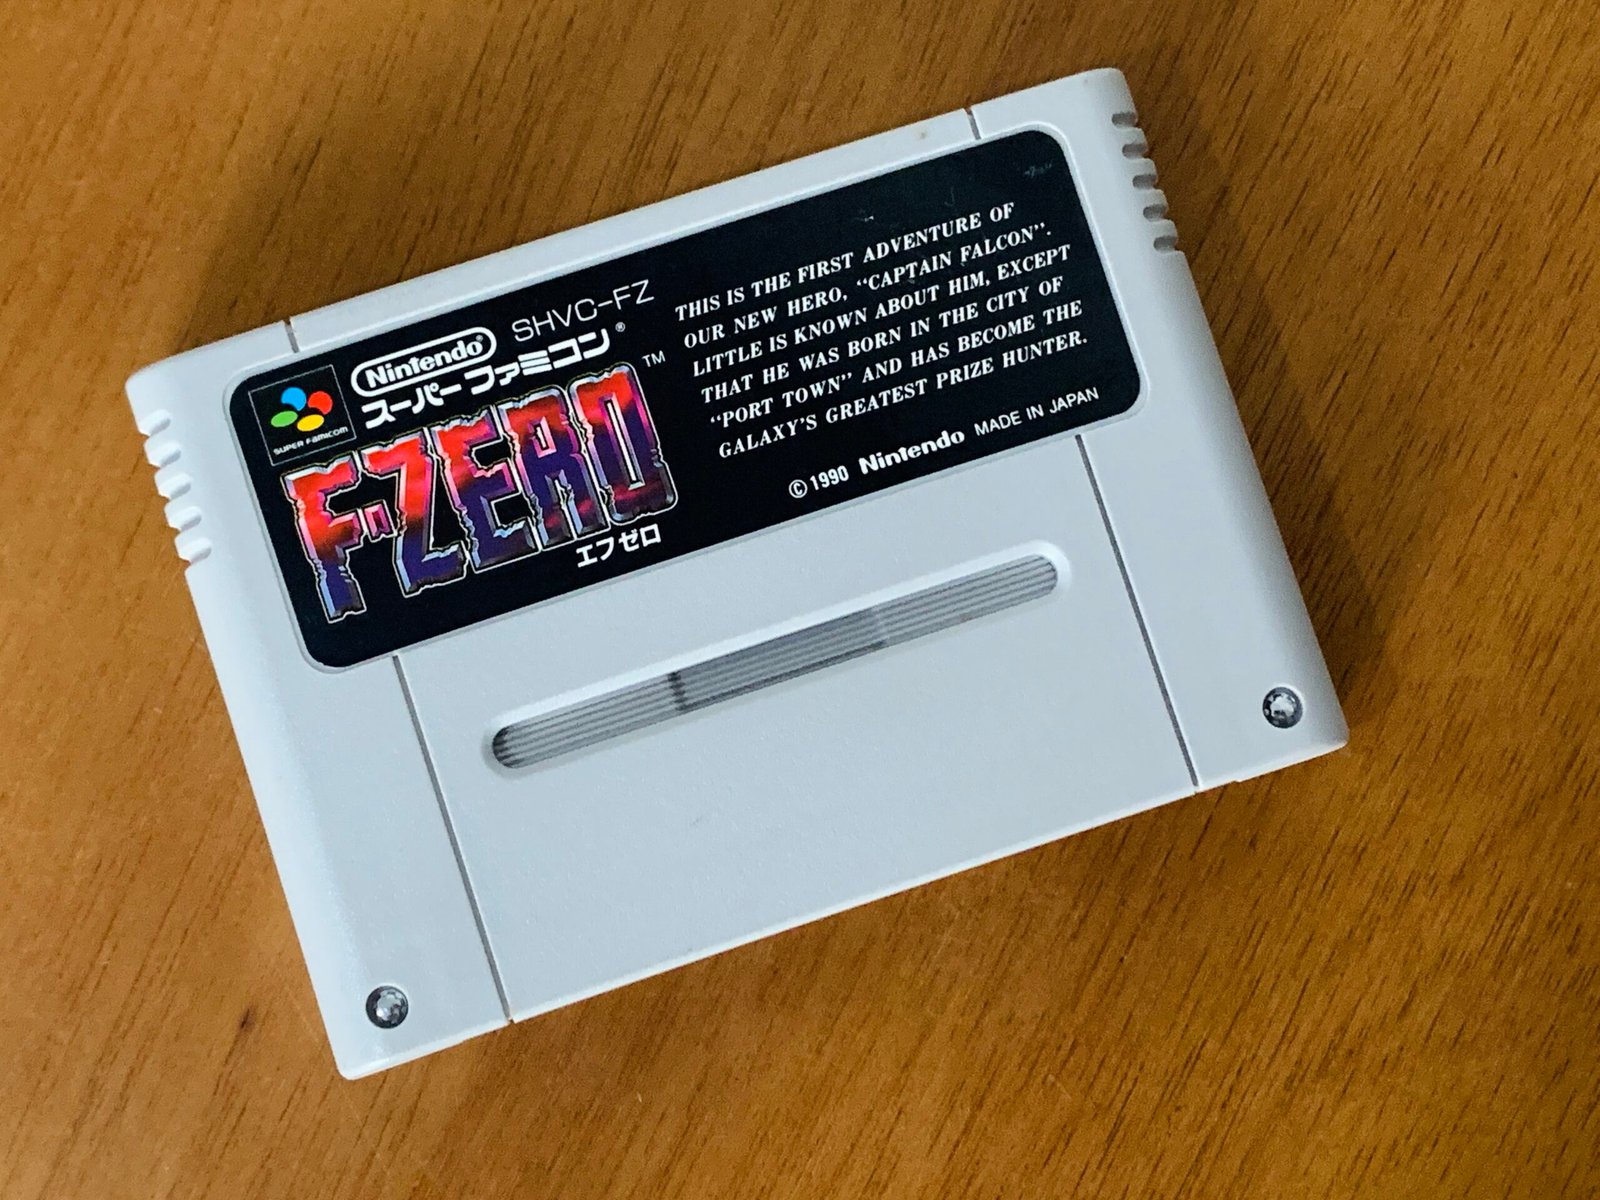 Jogo F Zero - Super Nintendo